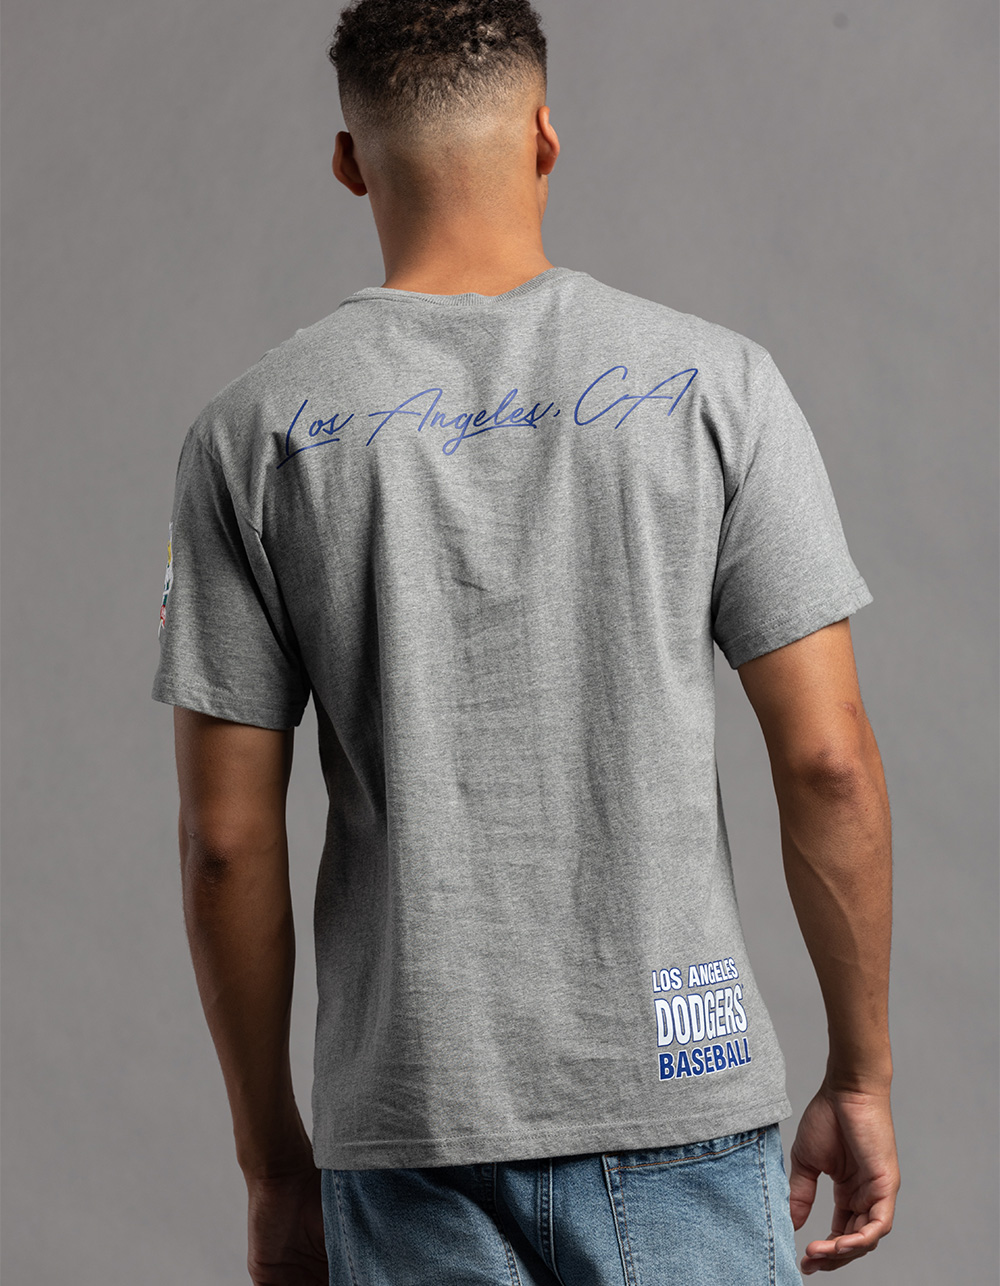 Coney Island Mens T Shirt with Brooklyn Dodgers Print